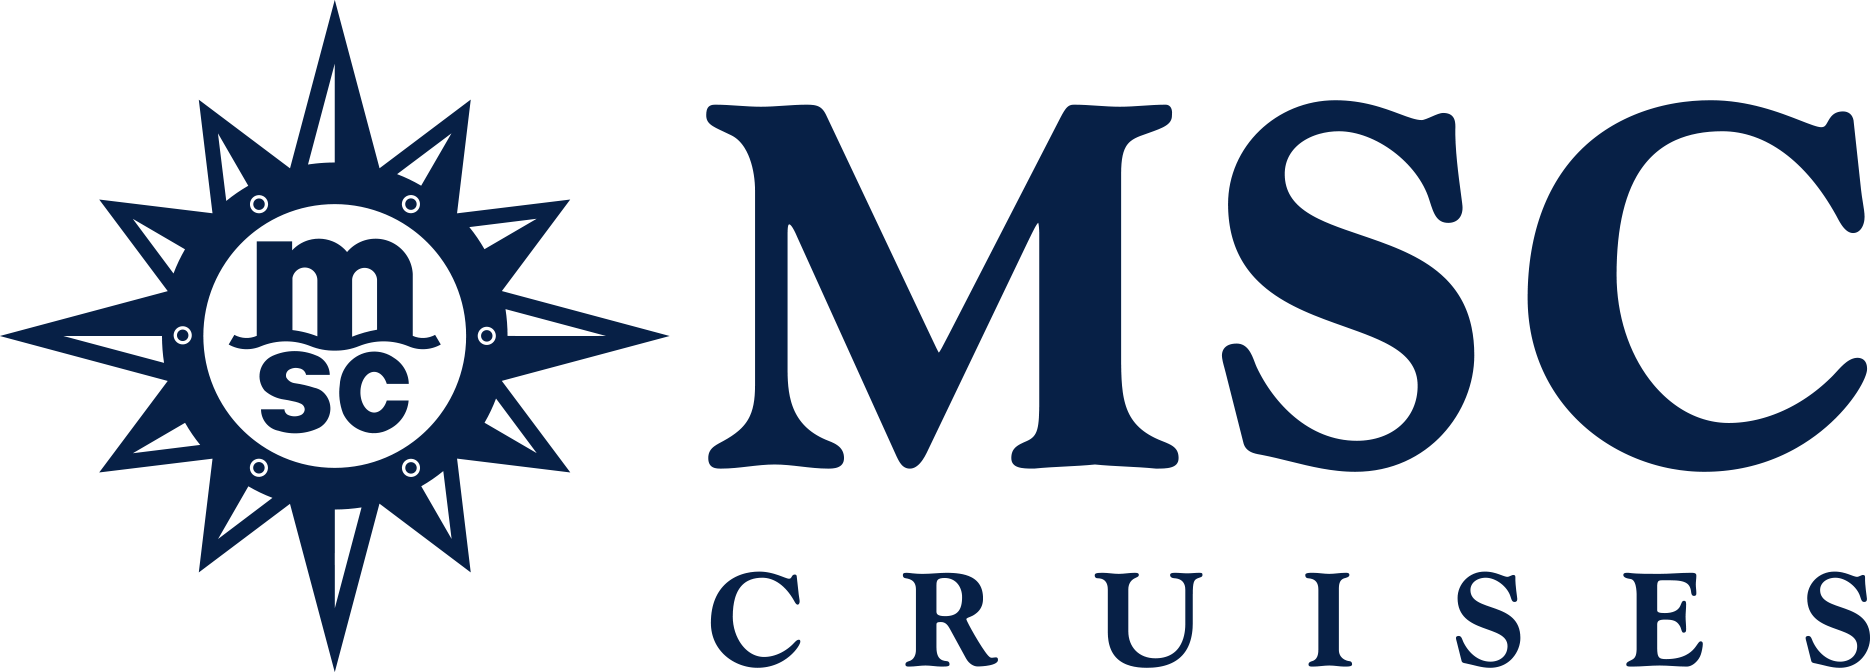 MSC Seashore Reederei Logo